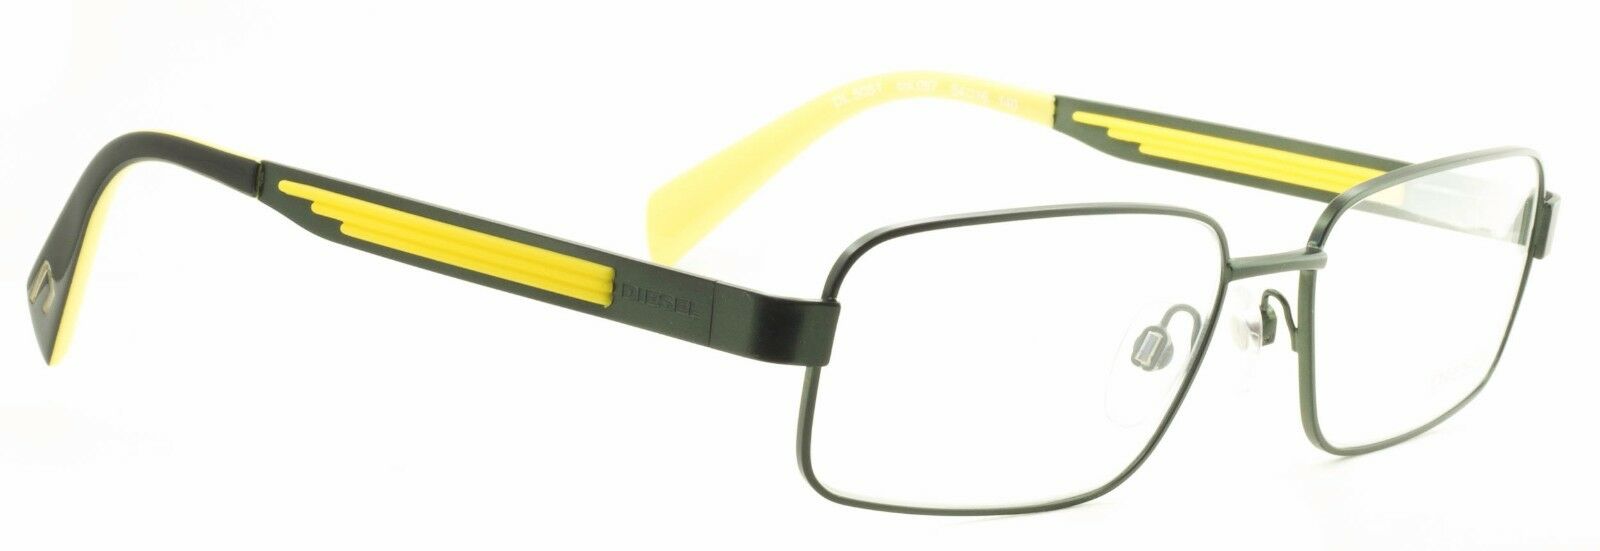 DIESEL DL 5051 col. 097 Eyewear FRAMES RX Optical Eyeglasses Glasses New - BNIB